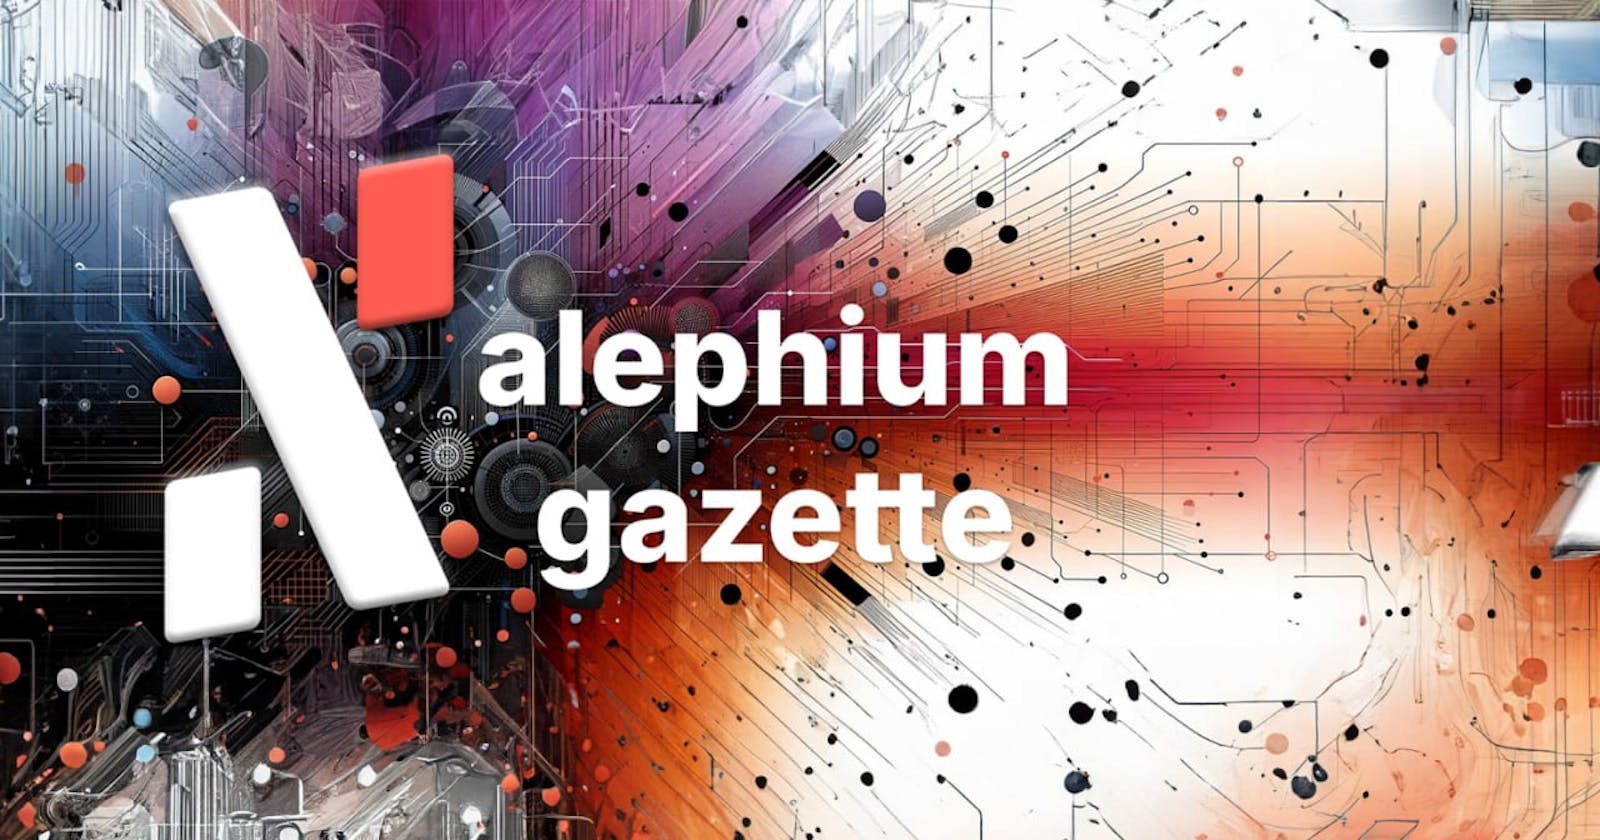 Mid-Week Update from the Alephium Gazette